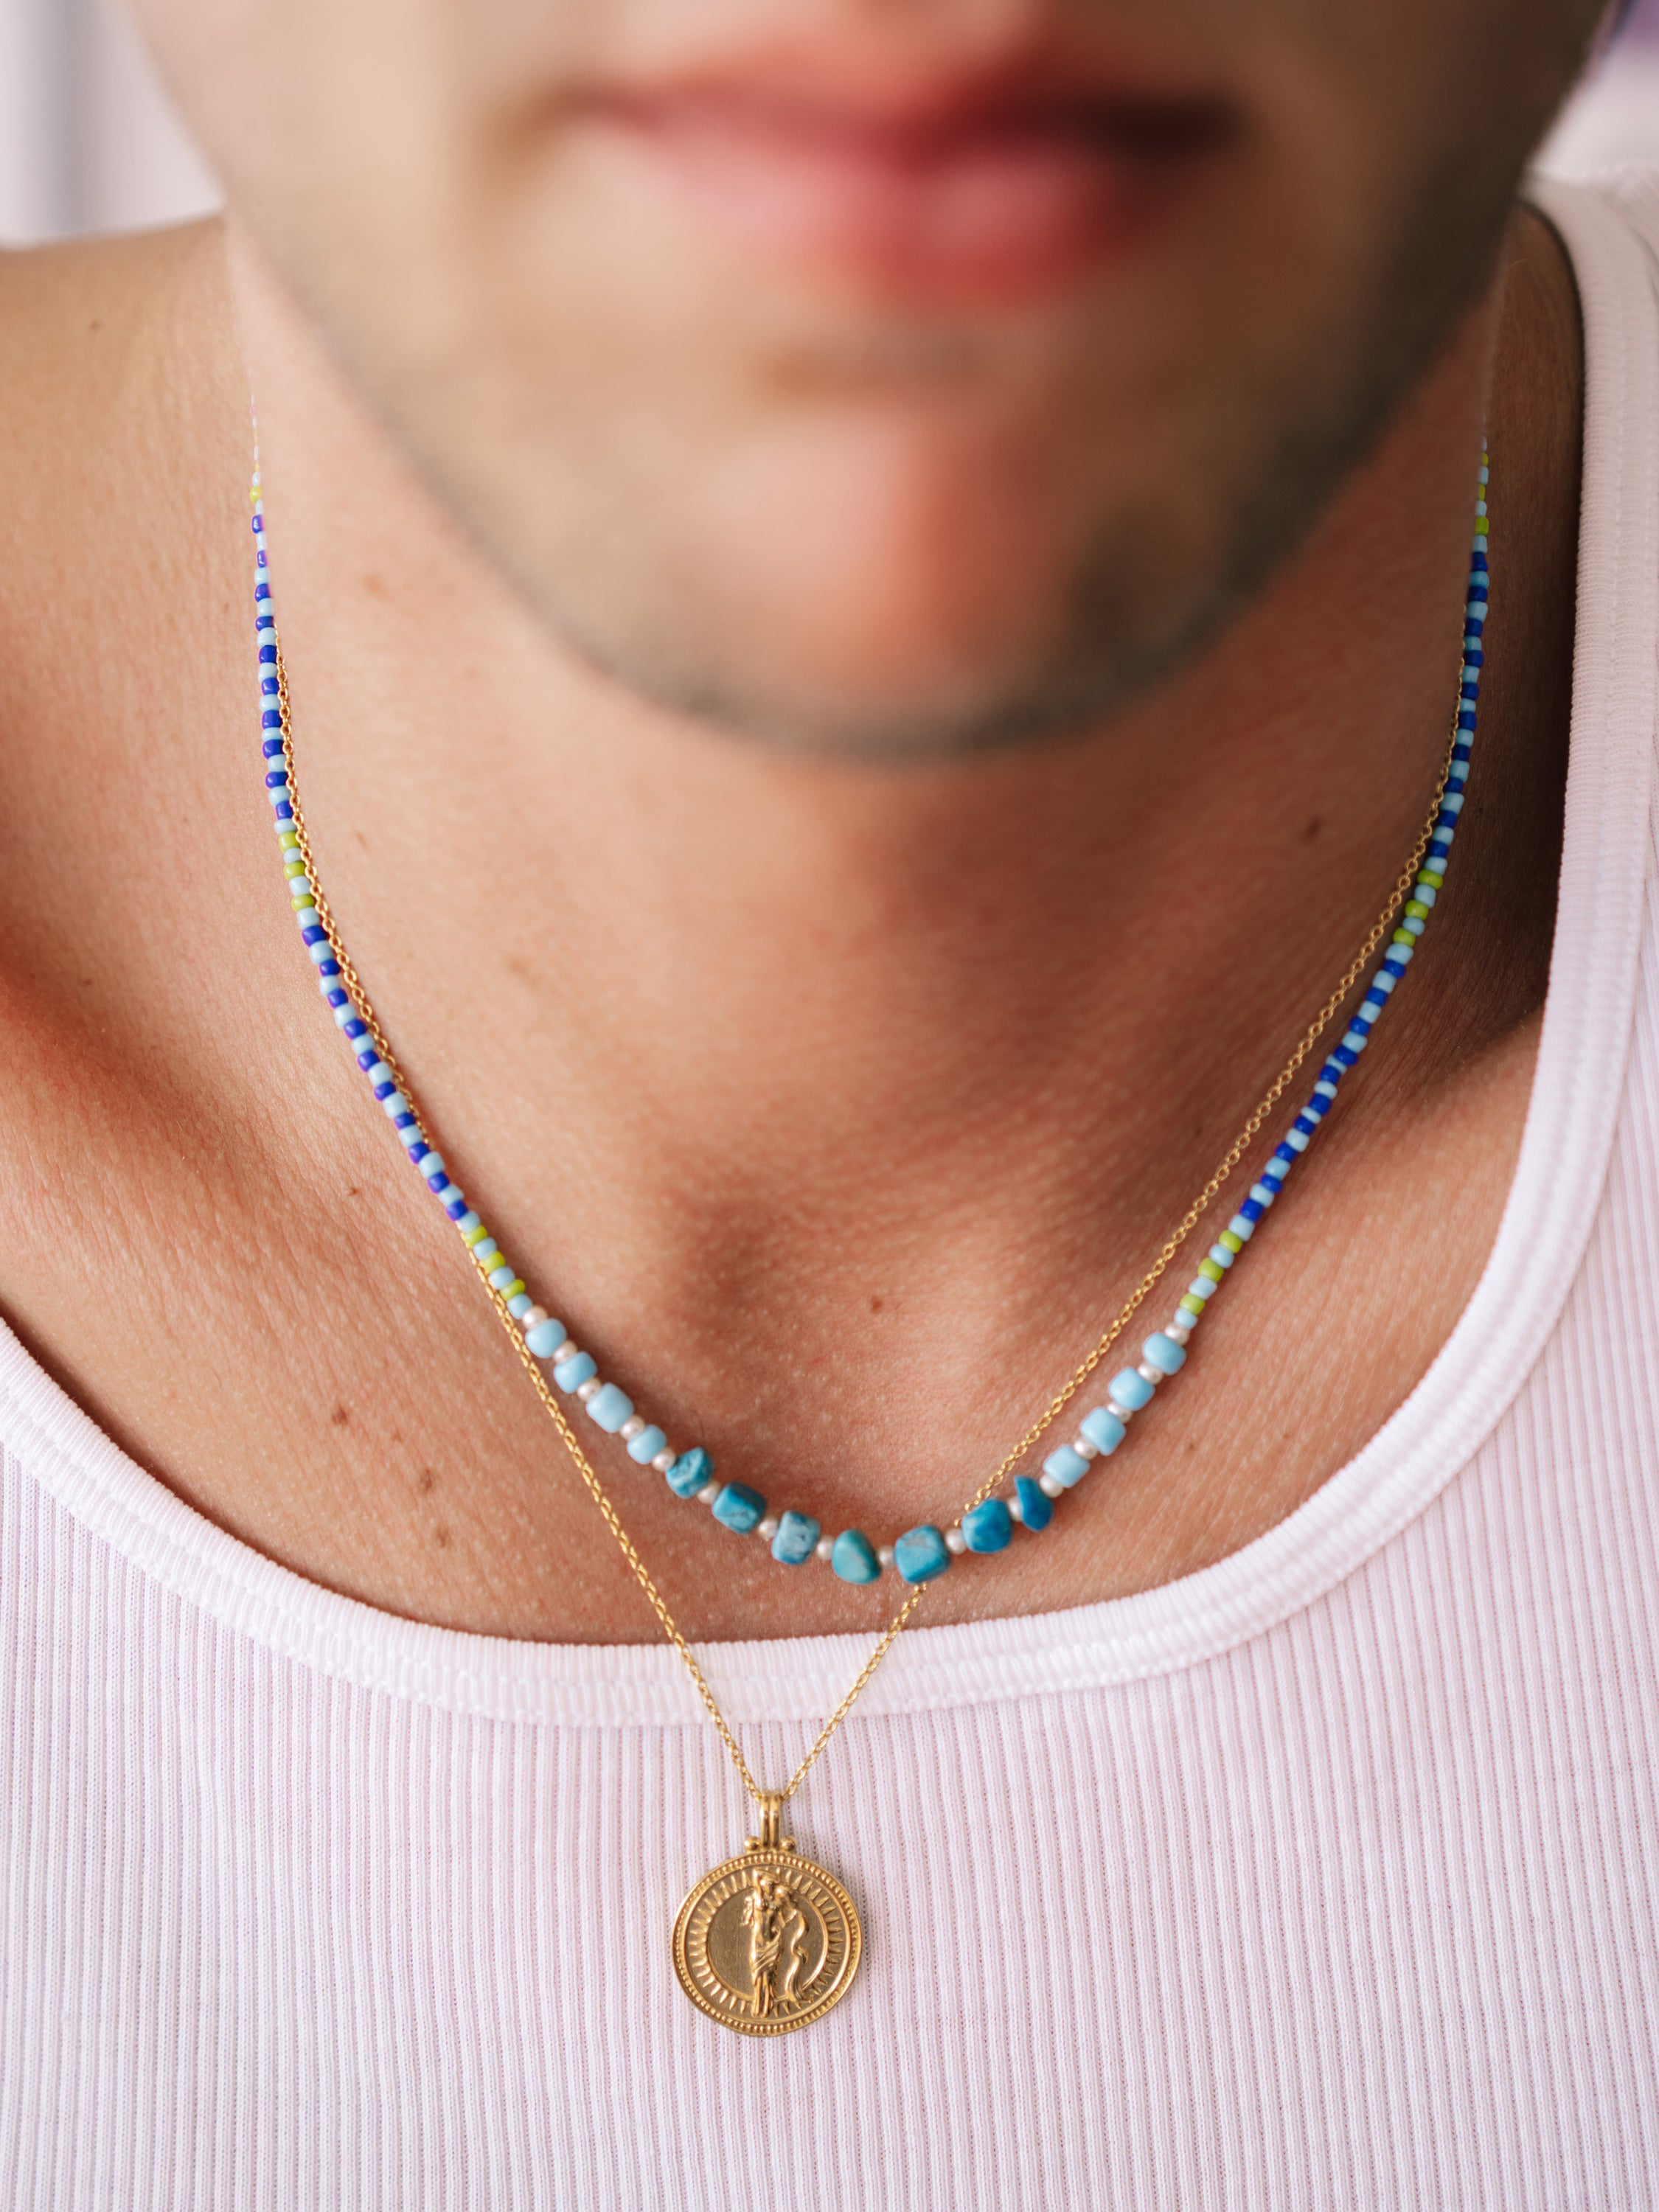 Buy Gold Aquarius Necklace for Men Online In India - Etsy India